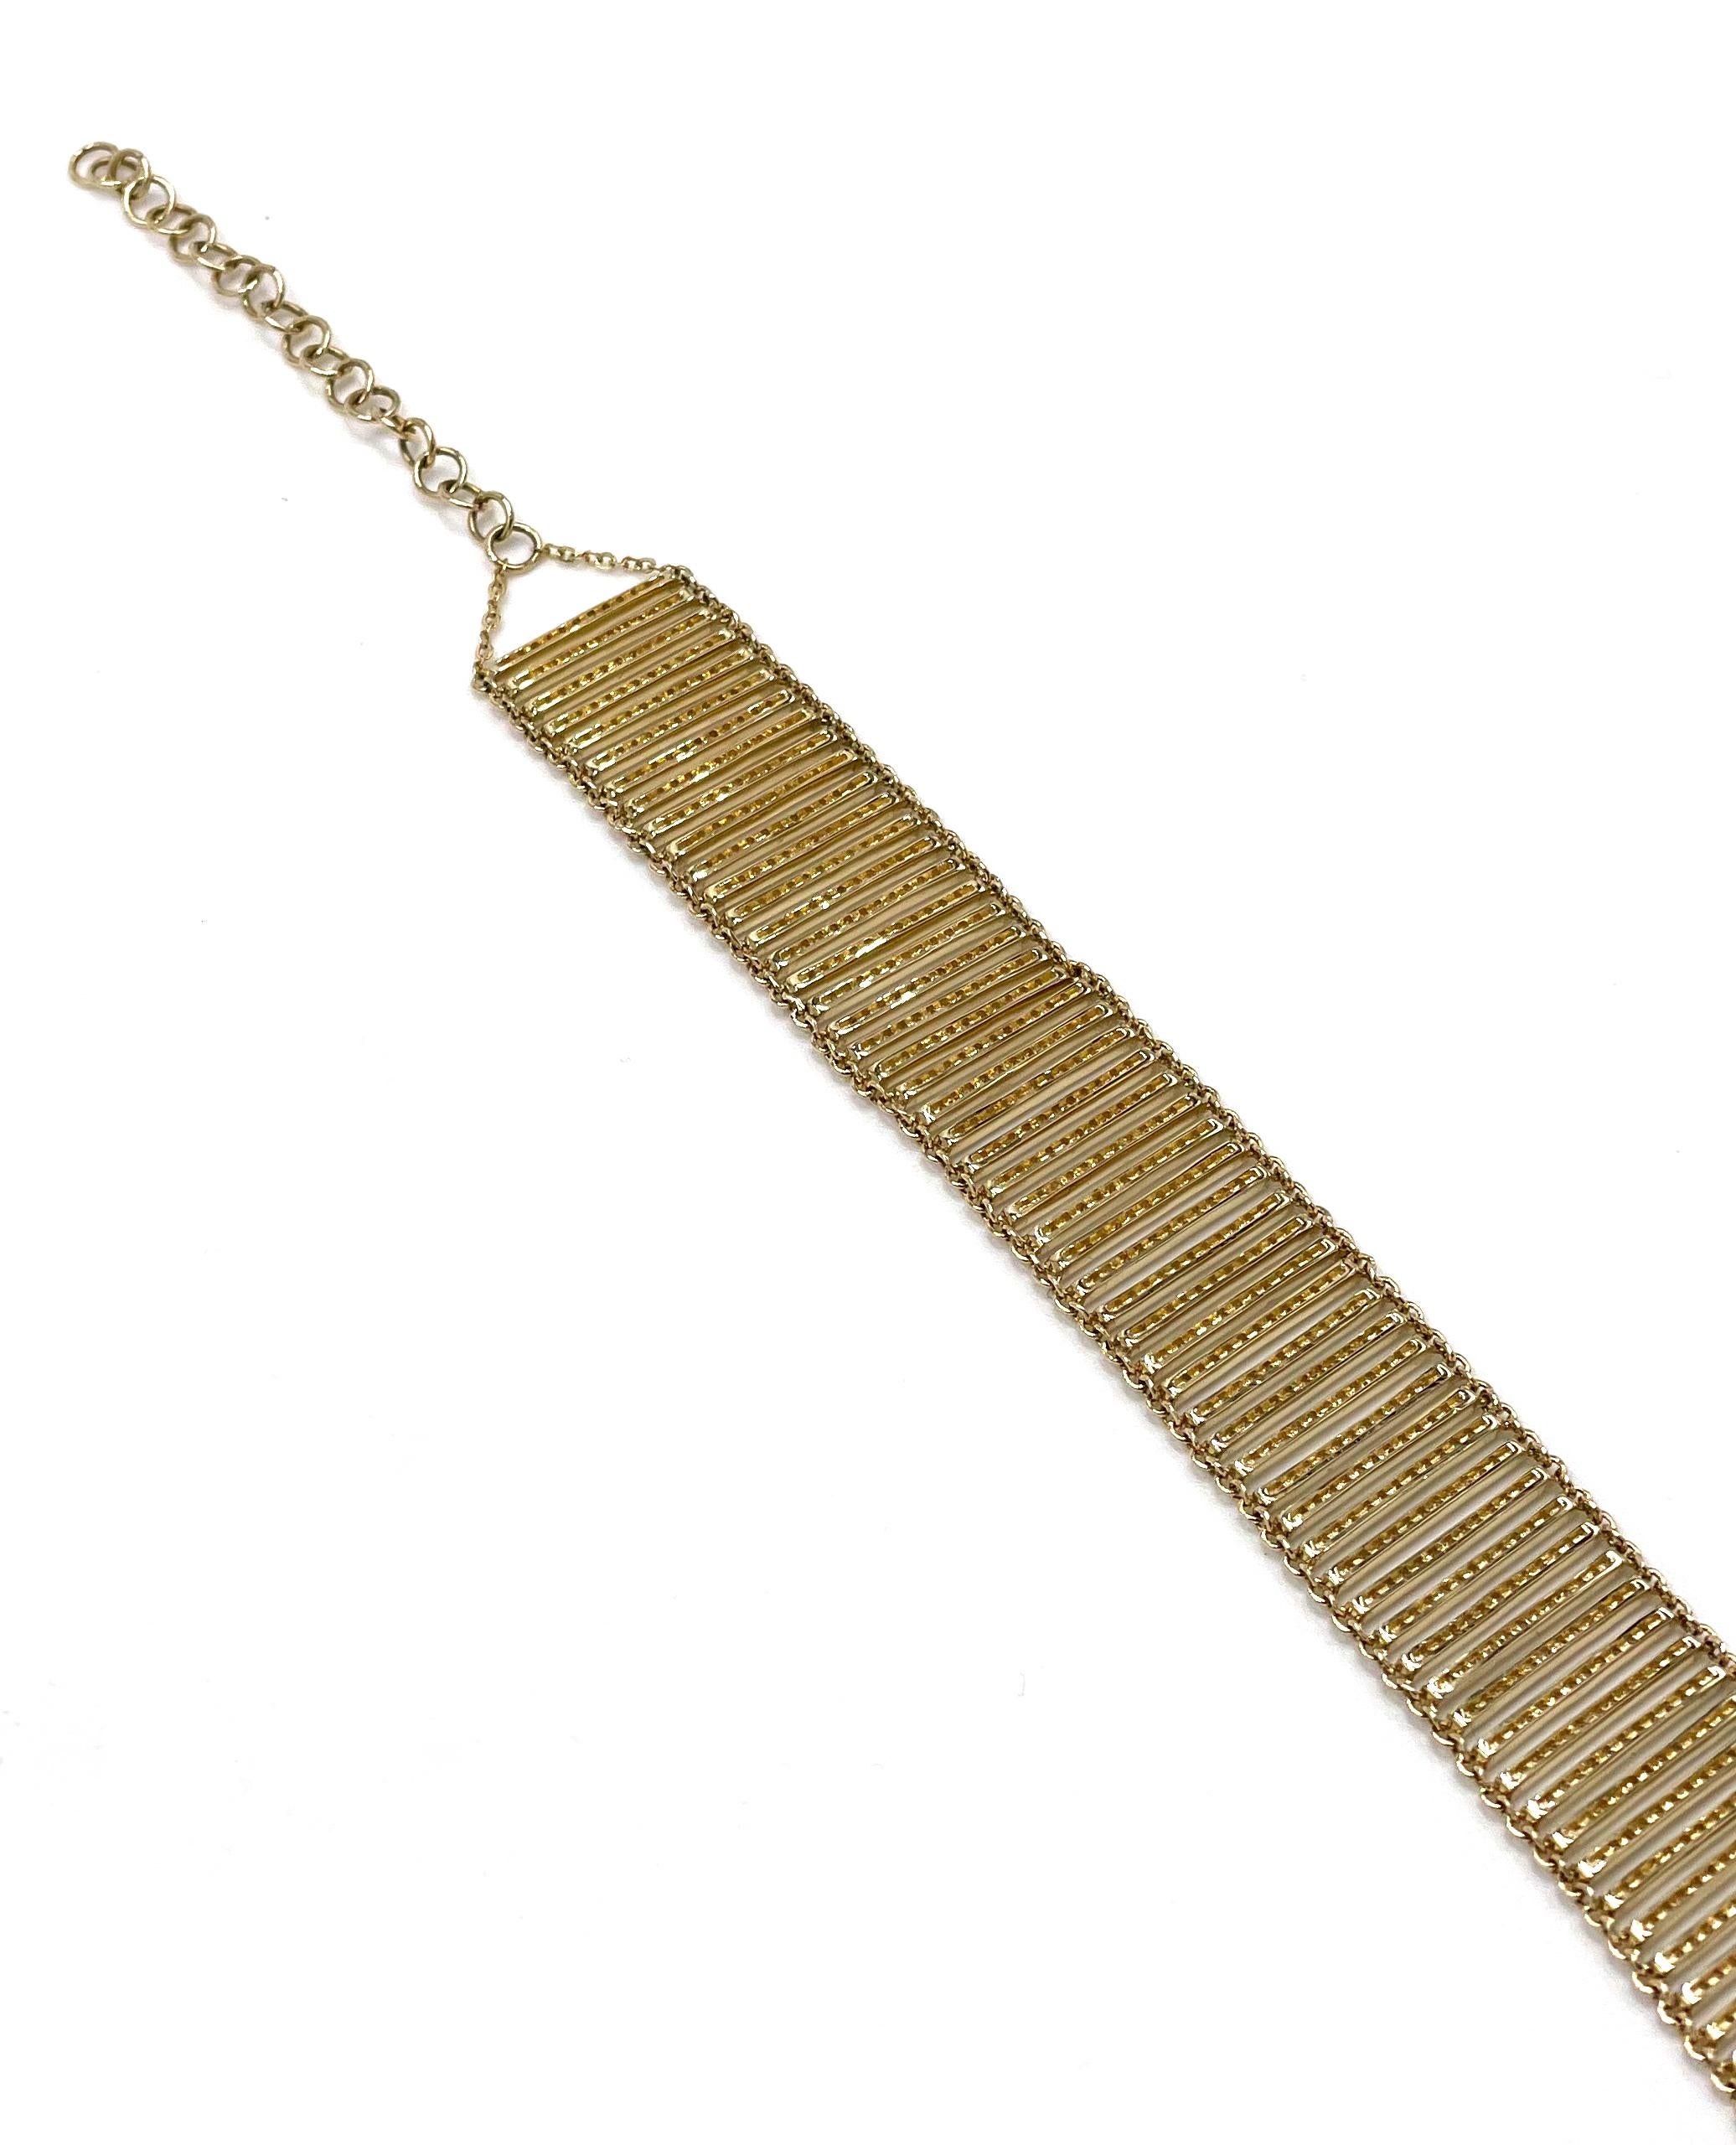 Contemporary 14K Yellow Gold Mesh Flexible Bracelet with Diamonds